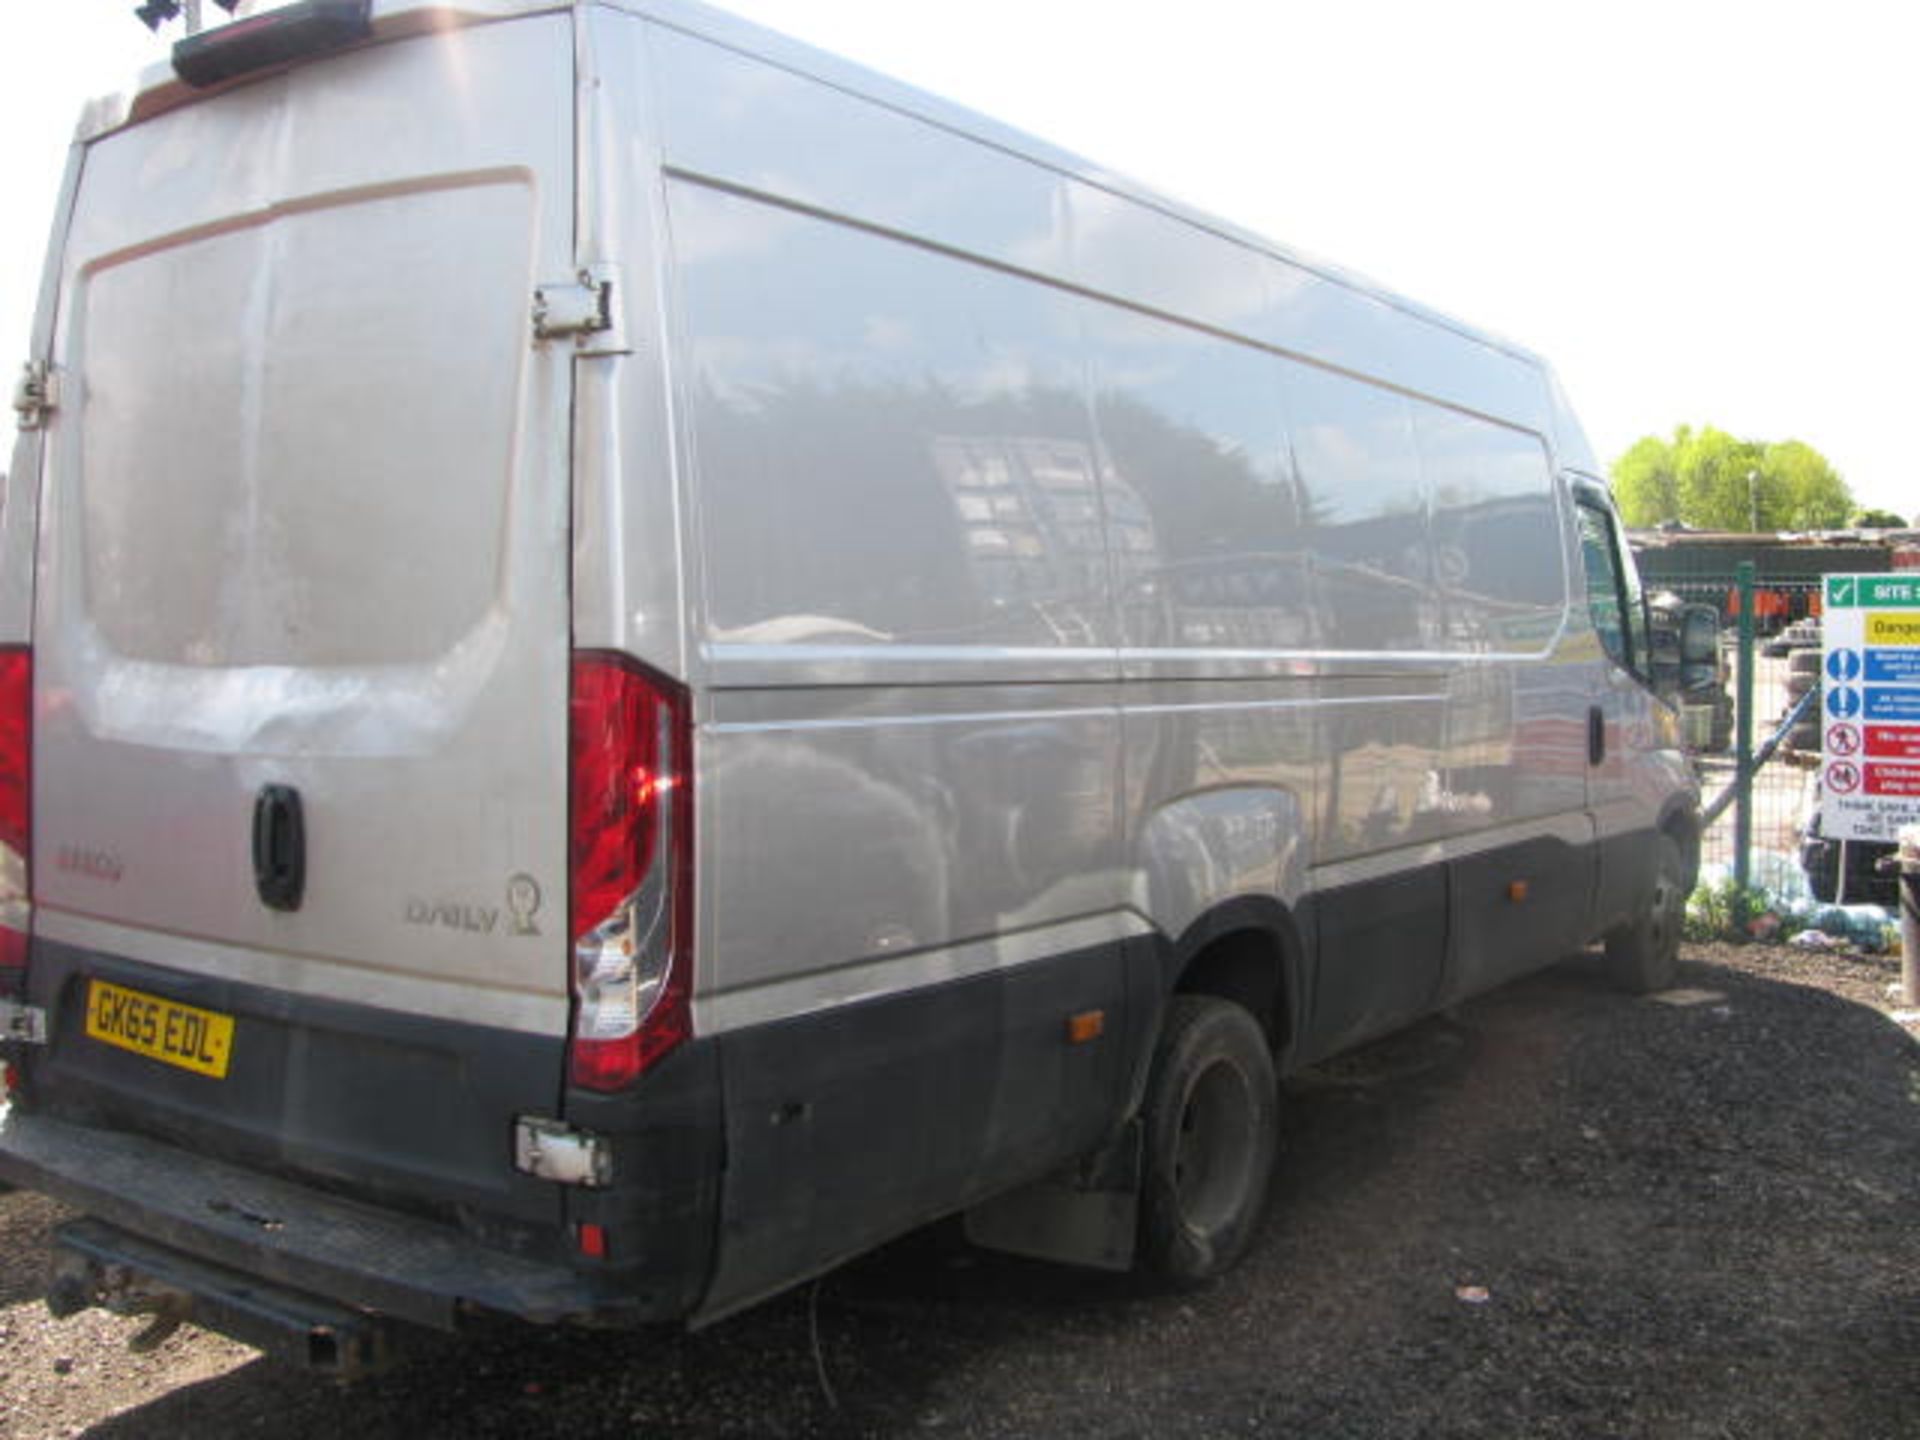 Iveco Daily 35-150 LWB panel van, Registration No. GK65 EDL - Image 5 of 7